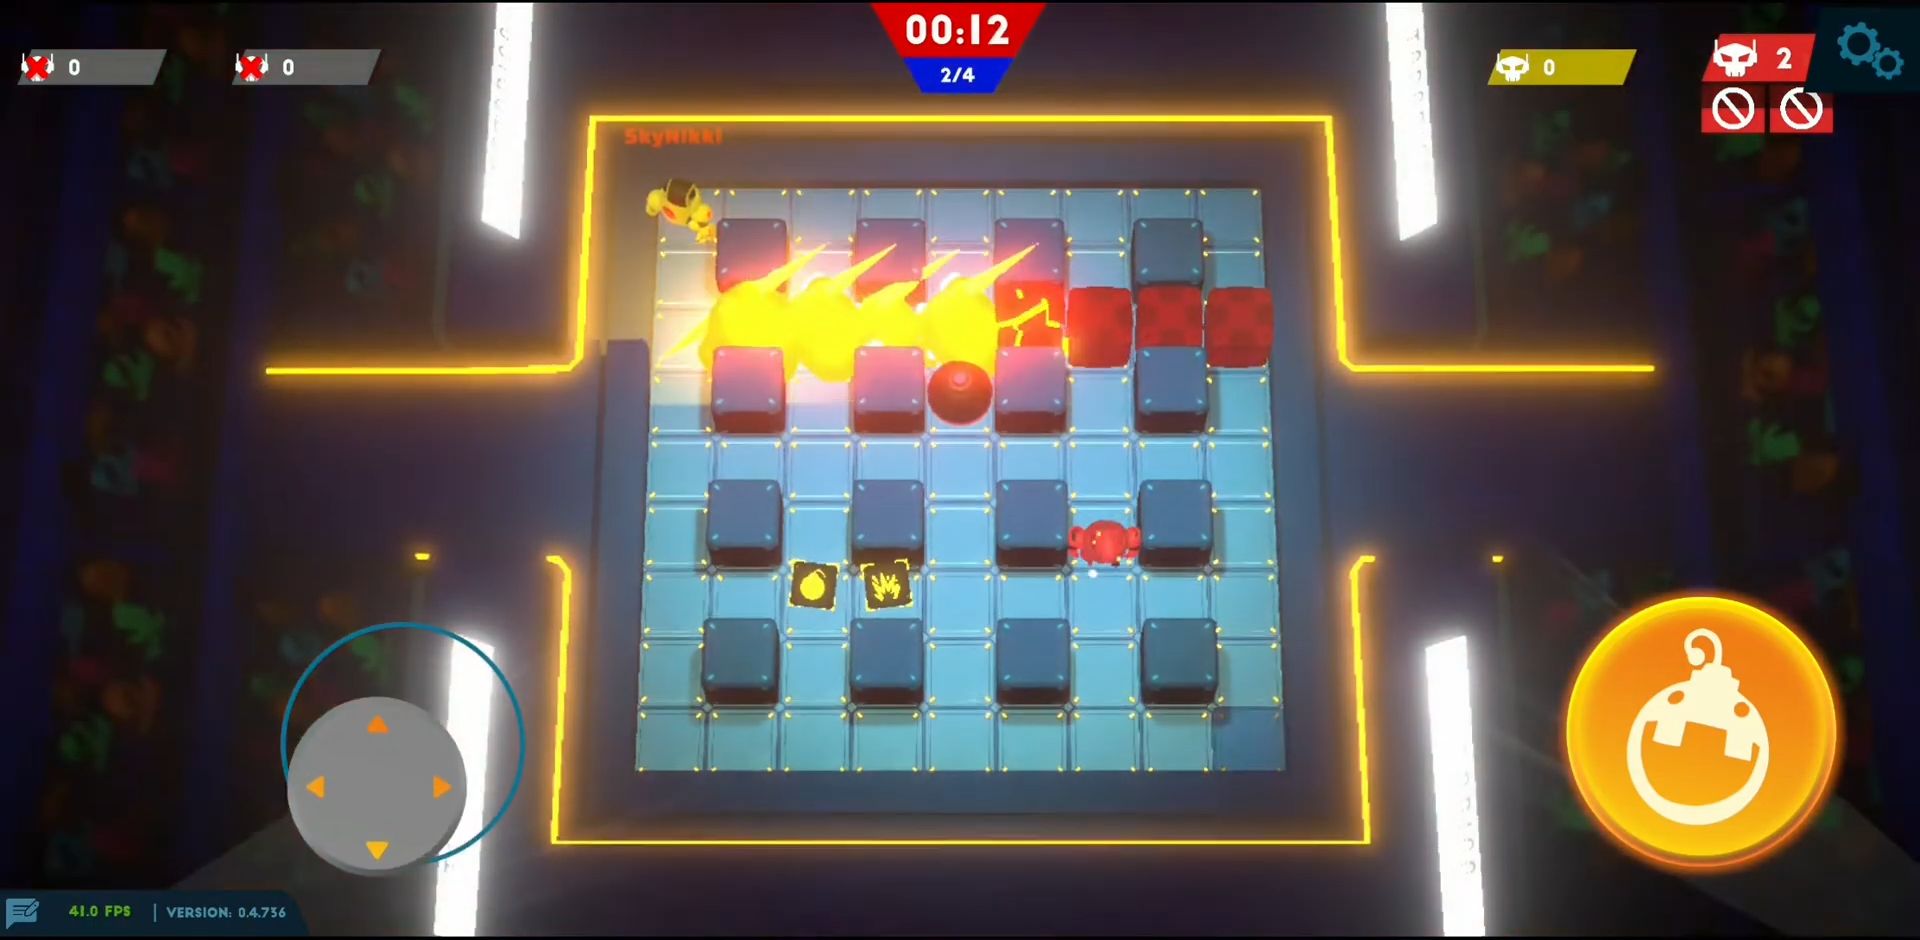 Bomb Bots Arena - Multiplayer Bomber Brawl screenshot 1